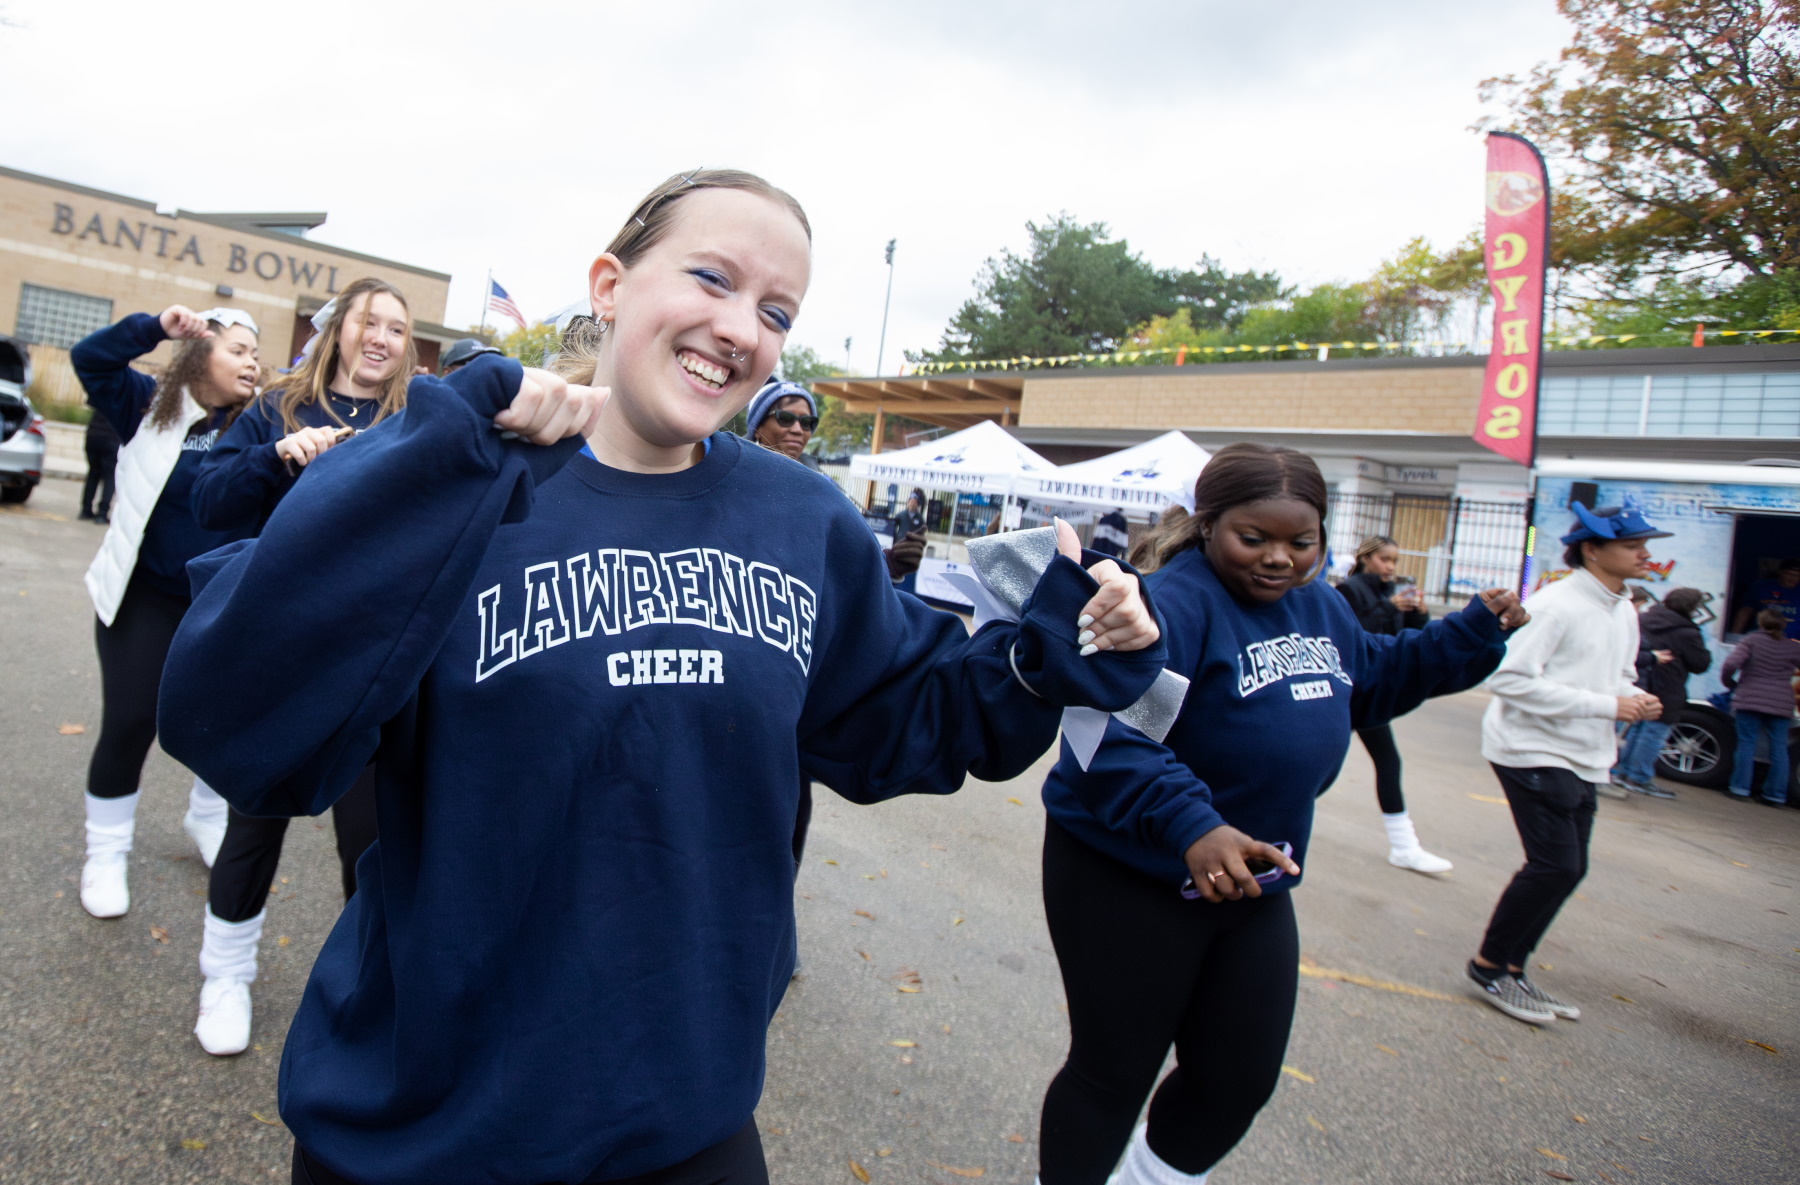 Students dance at the Homecoming tailgate party at Banta Bowl before Saturday's football game.